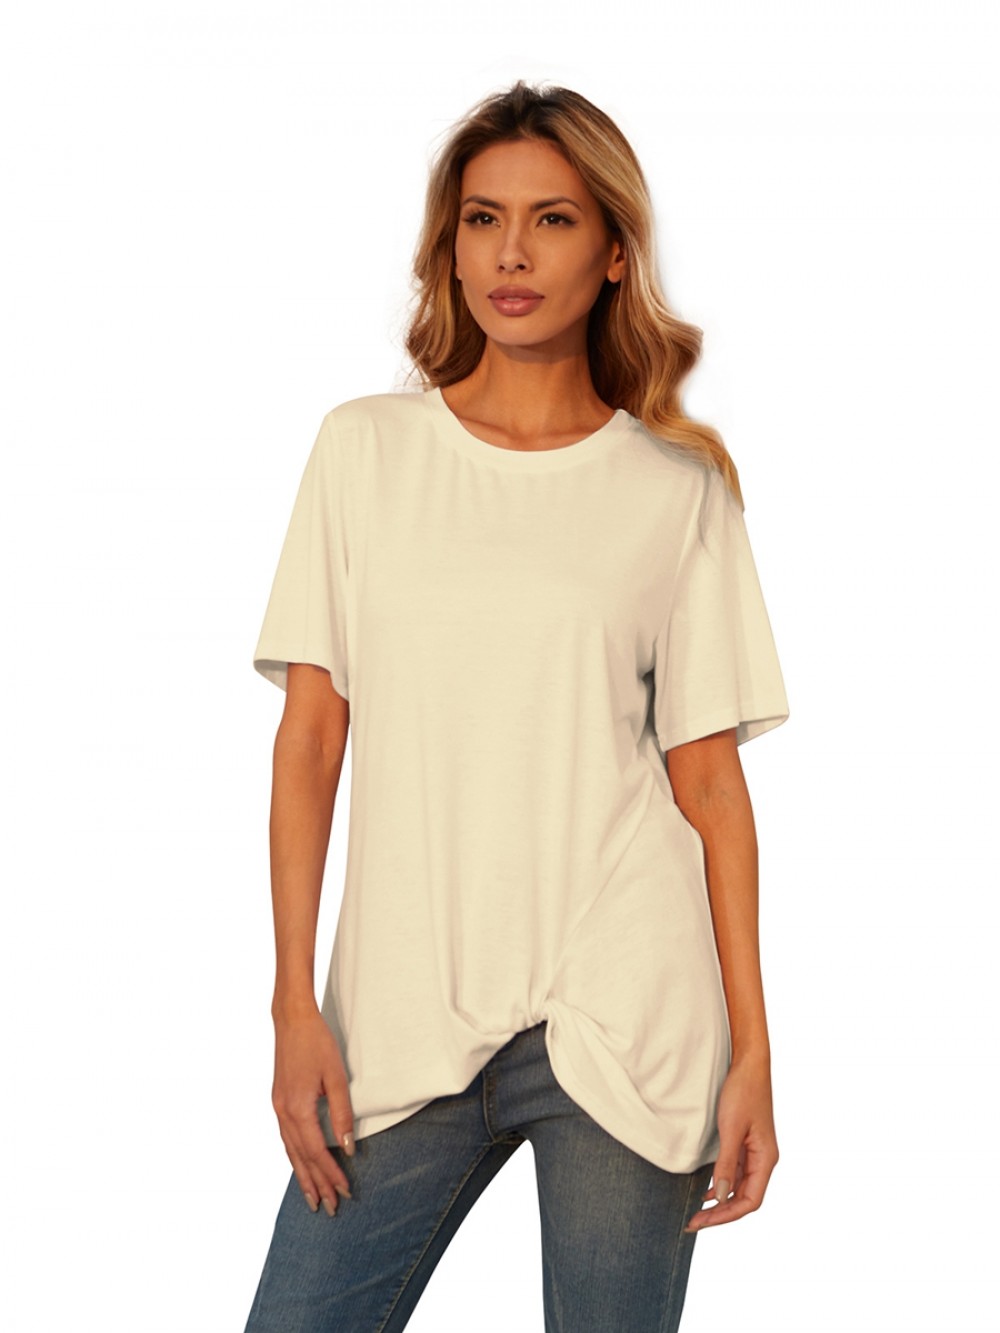 Beige Shirt Short Sleeve Hip Length Natural Women Fashion